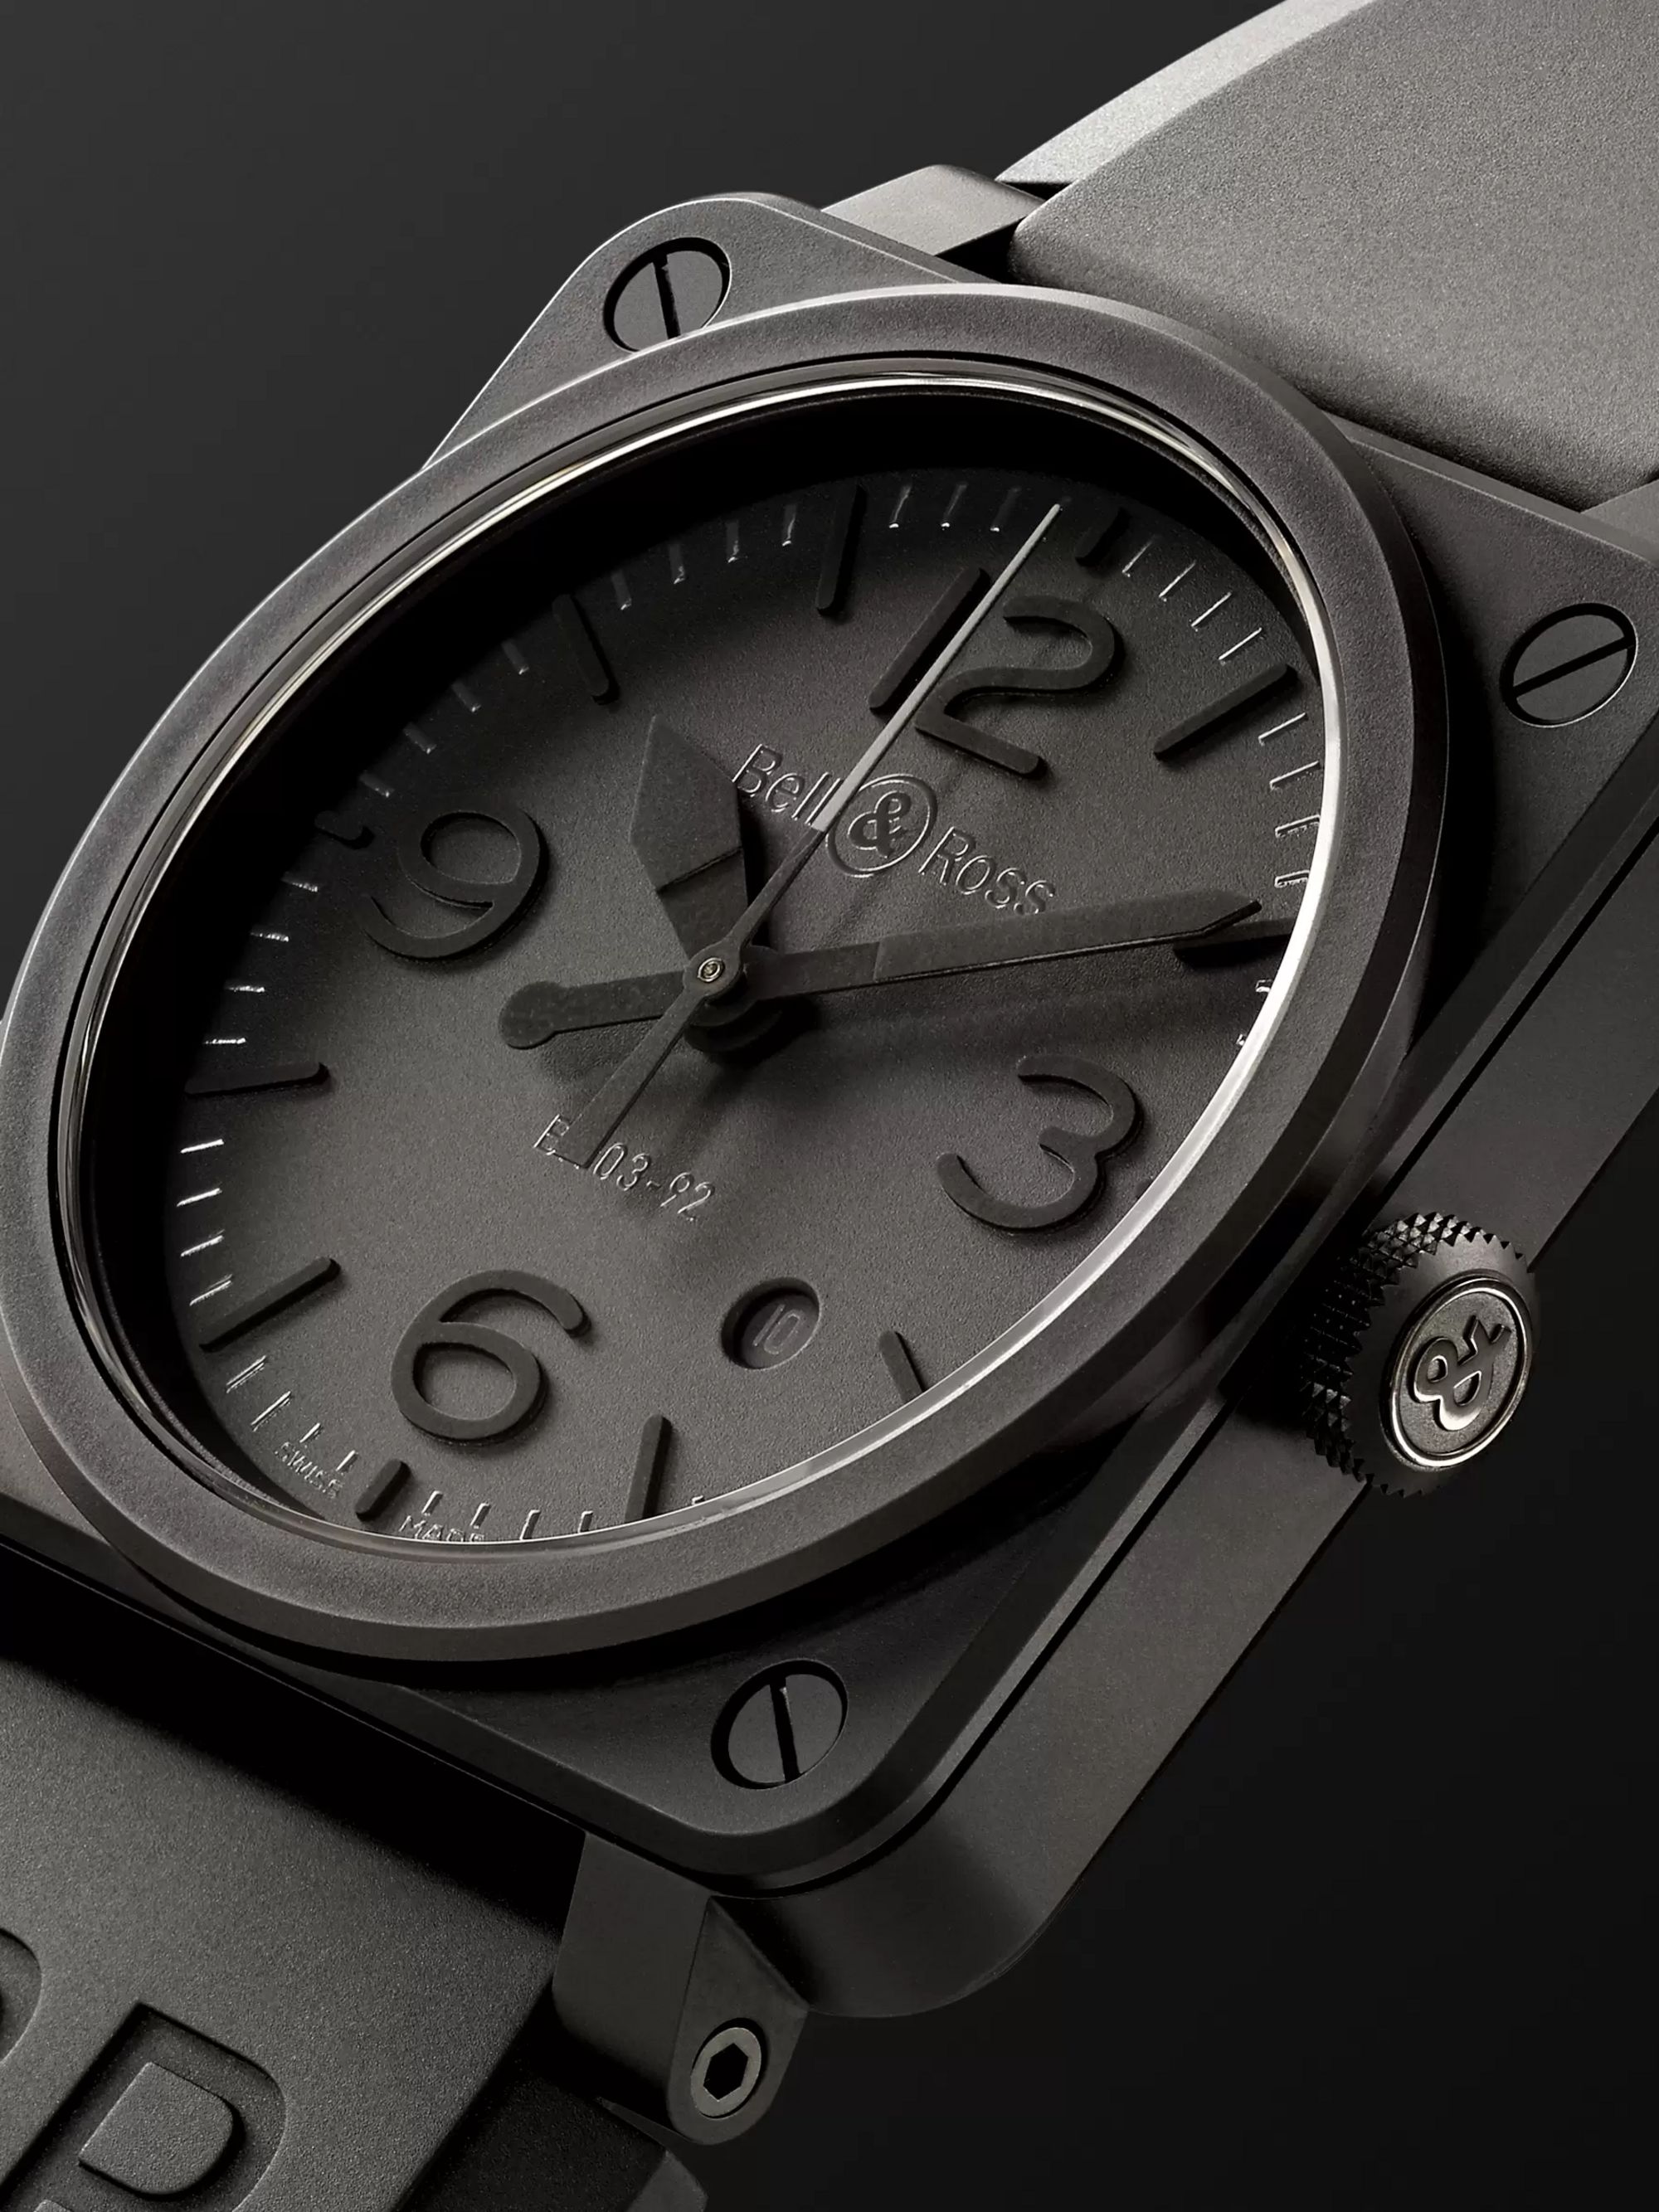 BELL & ROSS Phantom Automatic 42mm Ceramic and Rubber Watch, Ref. No. BR0392‐PHANTOM‐CE